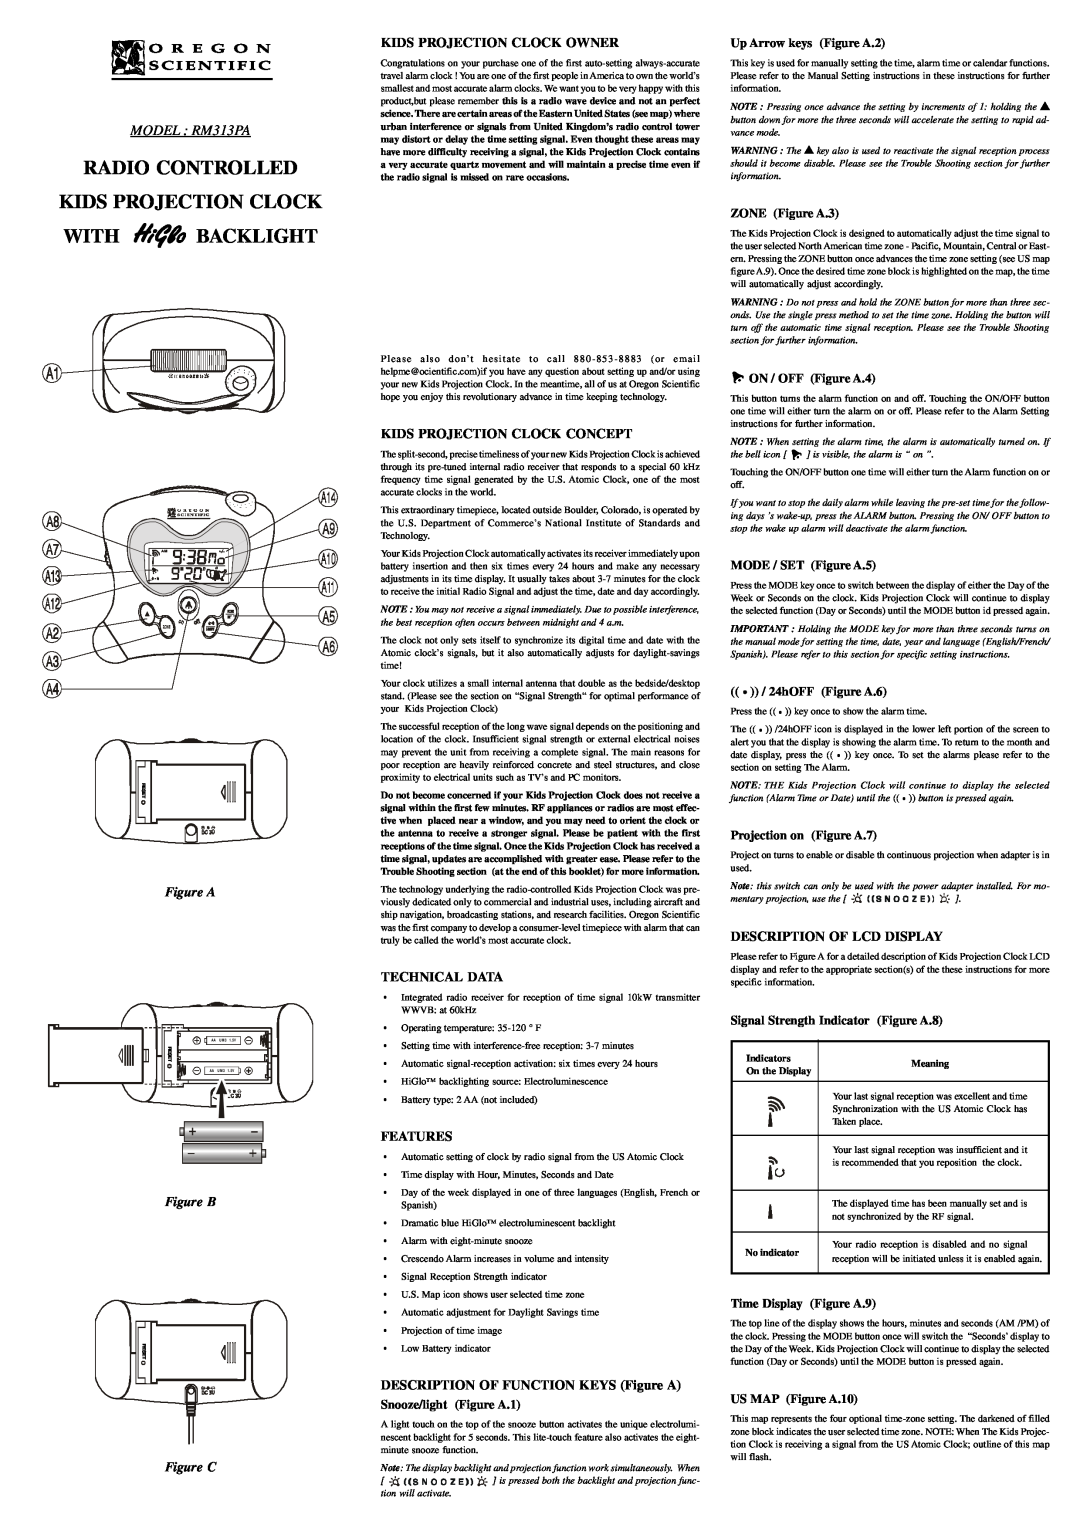 Oregon Scientific RM313PA manual Kids Projection Clock Owner, Kids Projection Clock Concept, Technical Data, Features 